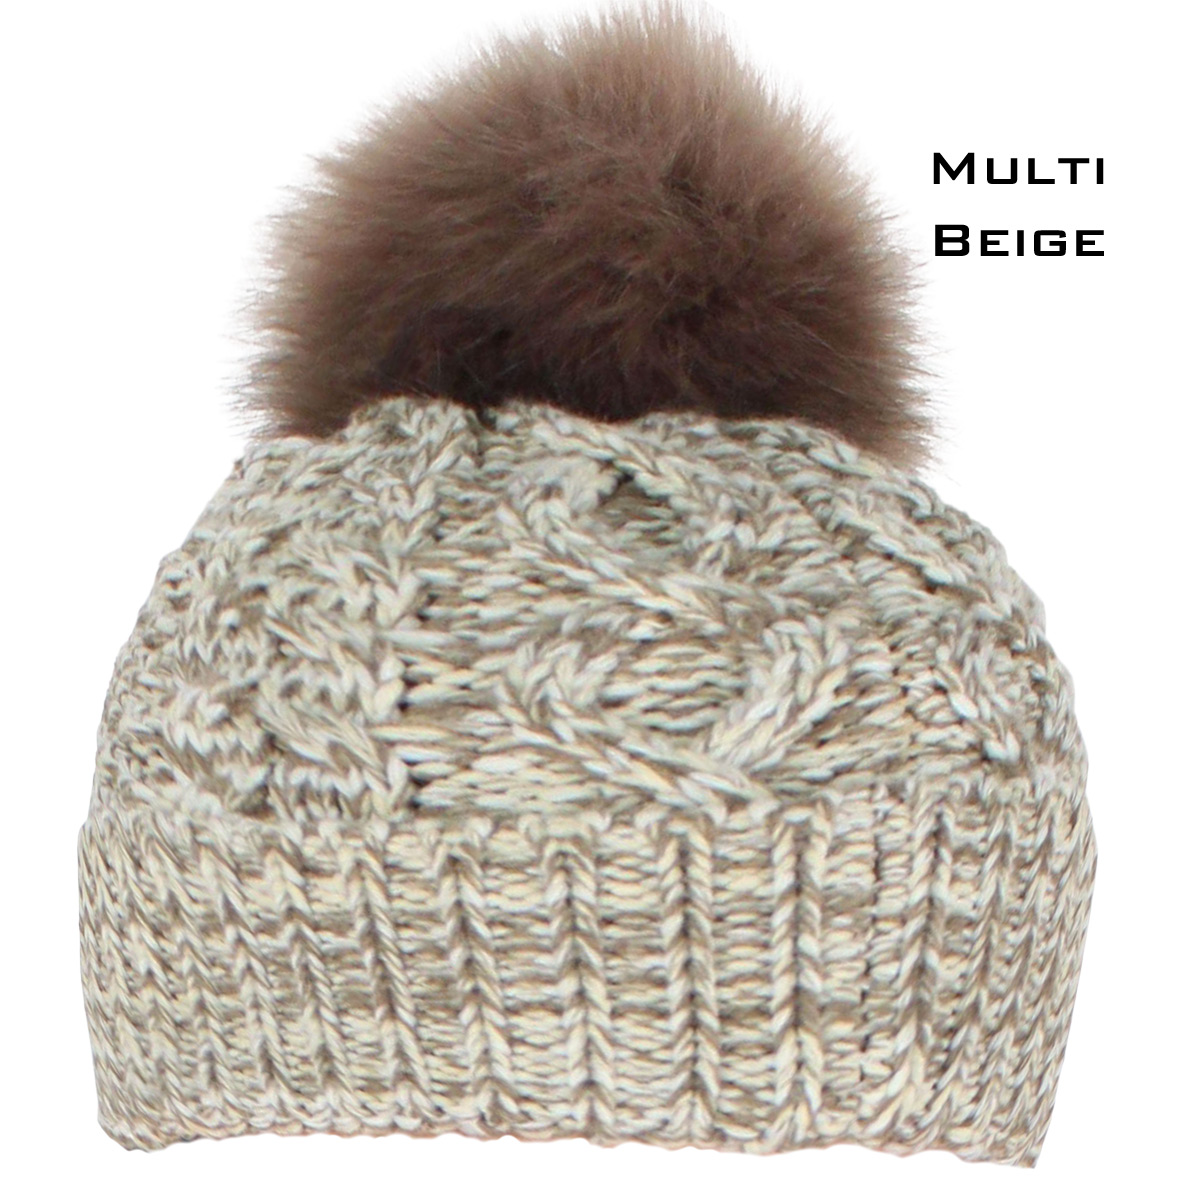 3114 - Winter Knit Hats 10026 LIGHT PINK/FUR POM POM Knit Winter Hat - One Size Fits Most